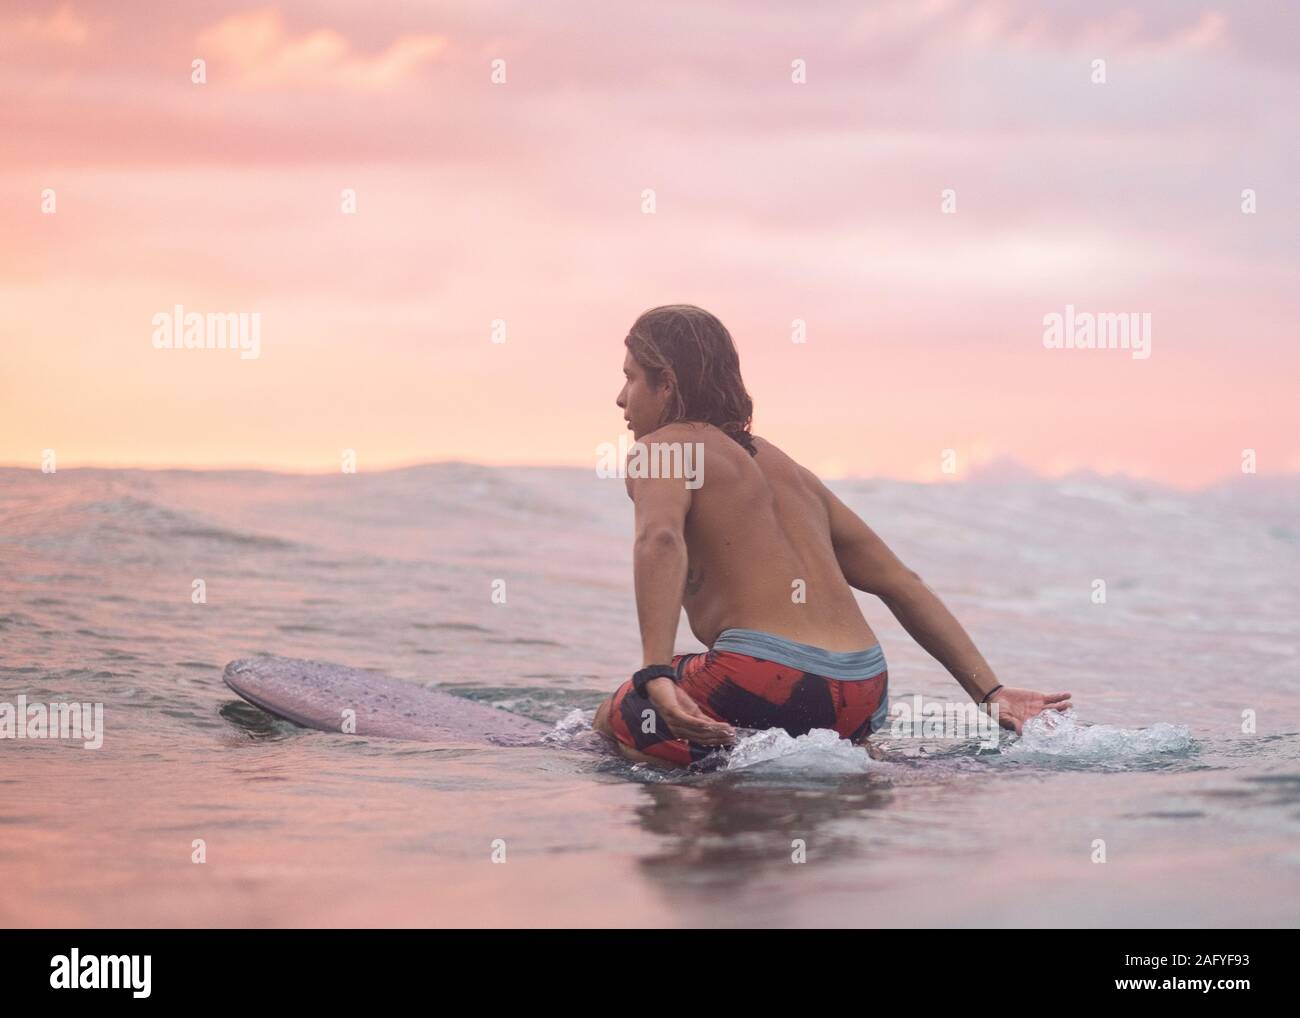 Surfing the sunrise in Costa Rica Stock Photo